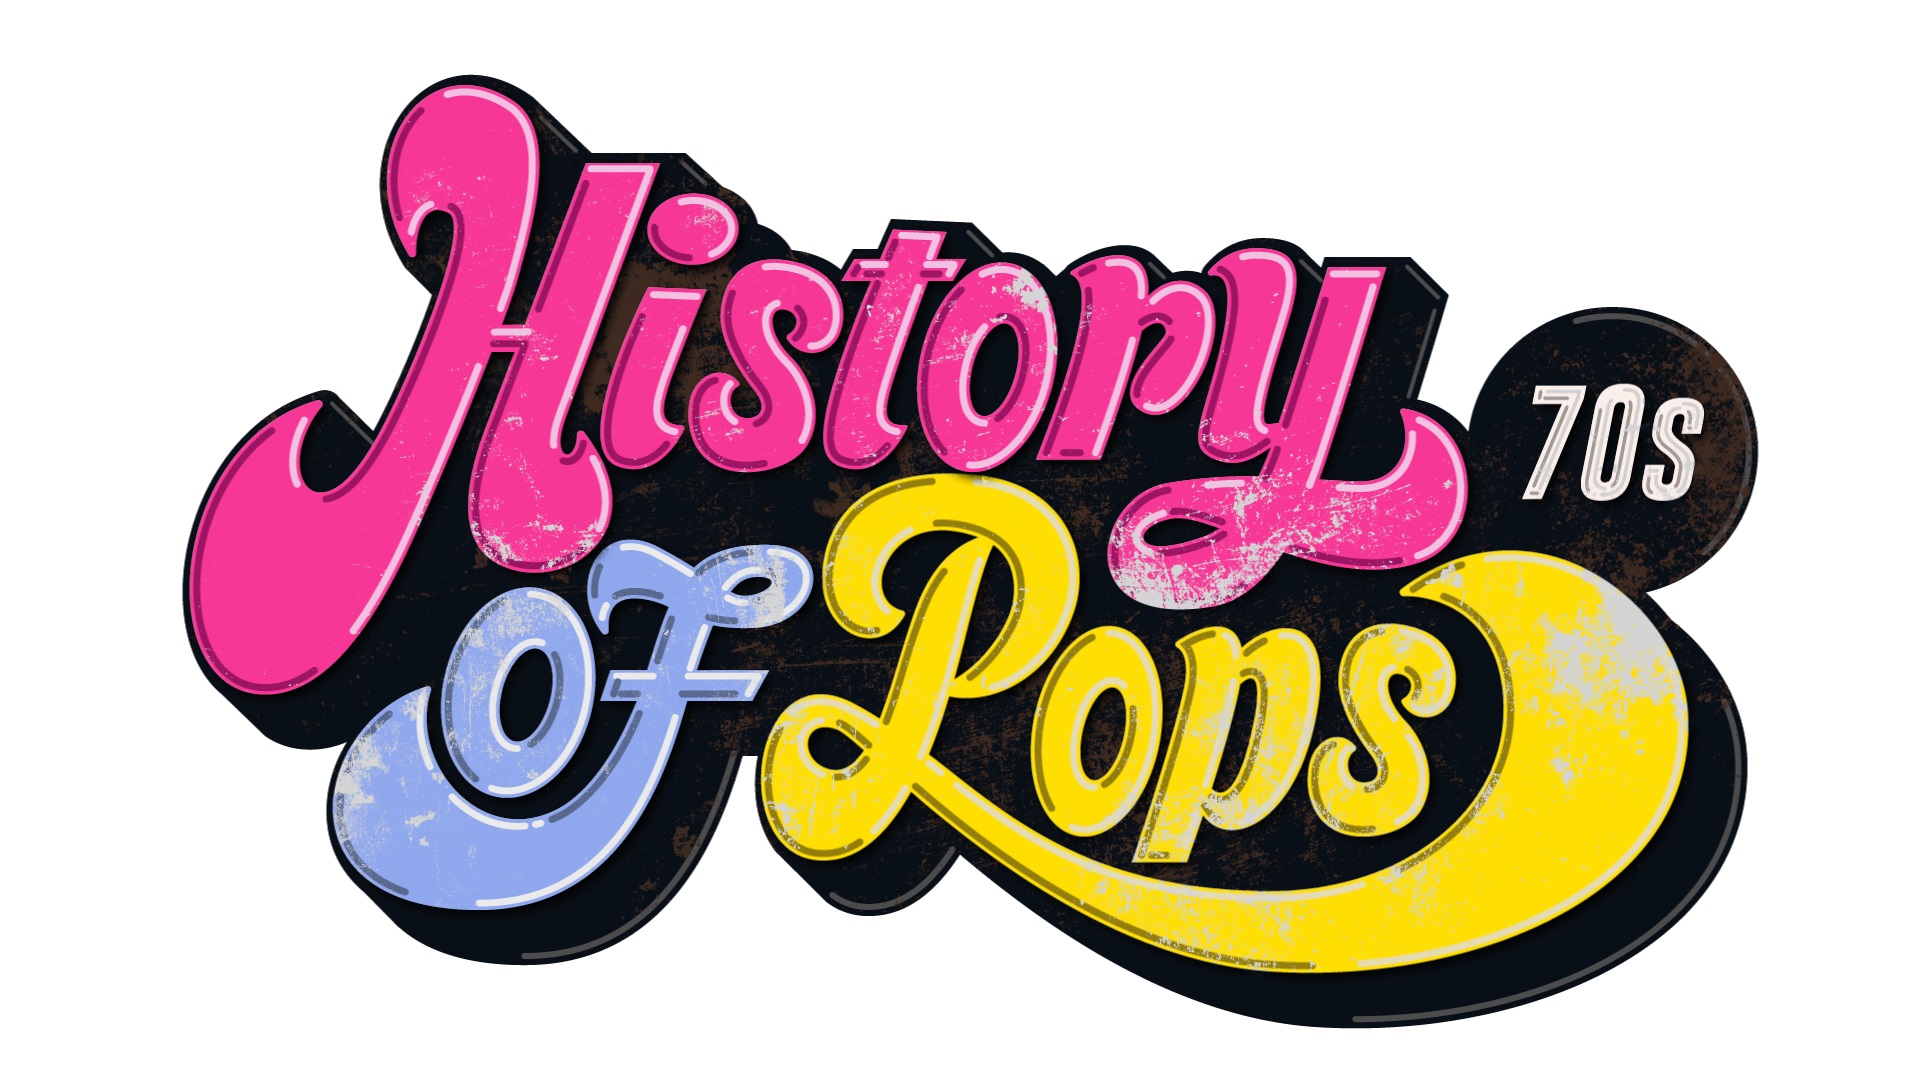 History of Pops 70’s